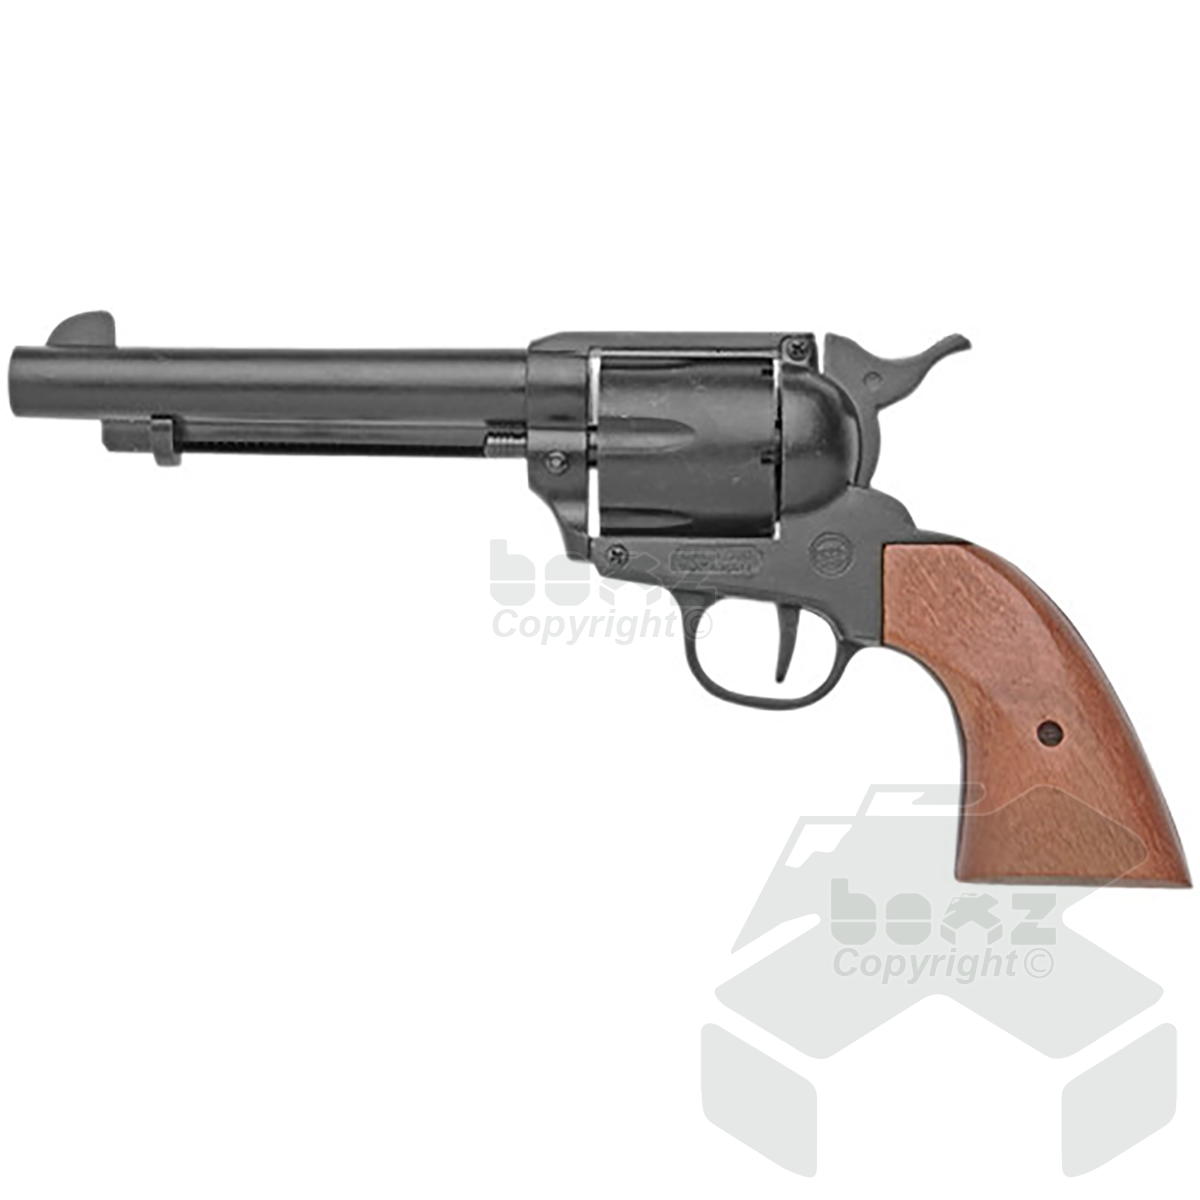 Bruni Single Action Blank Firing Revolvers - .380